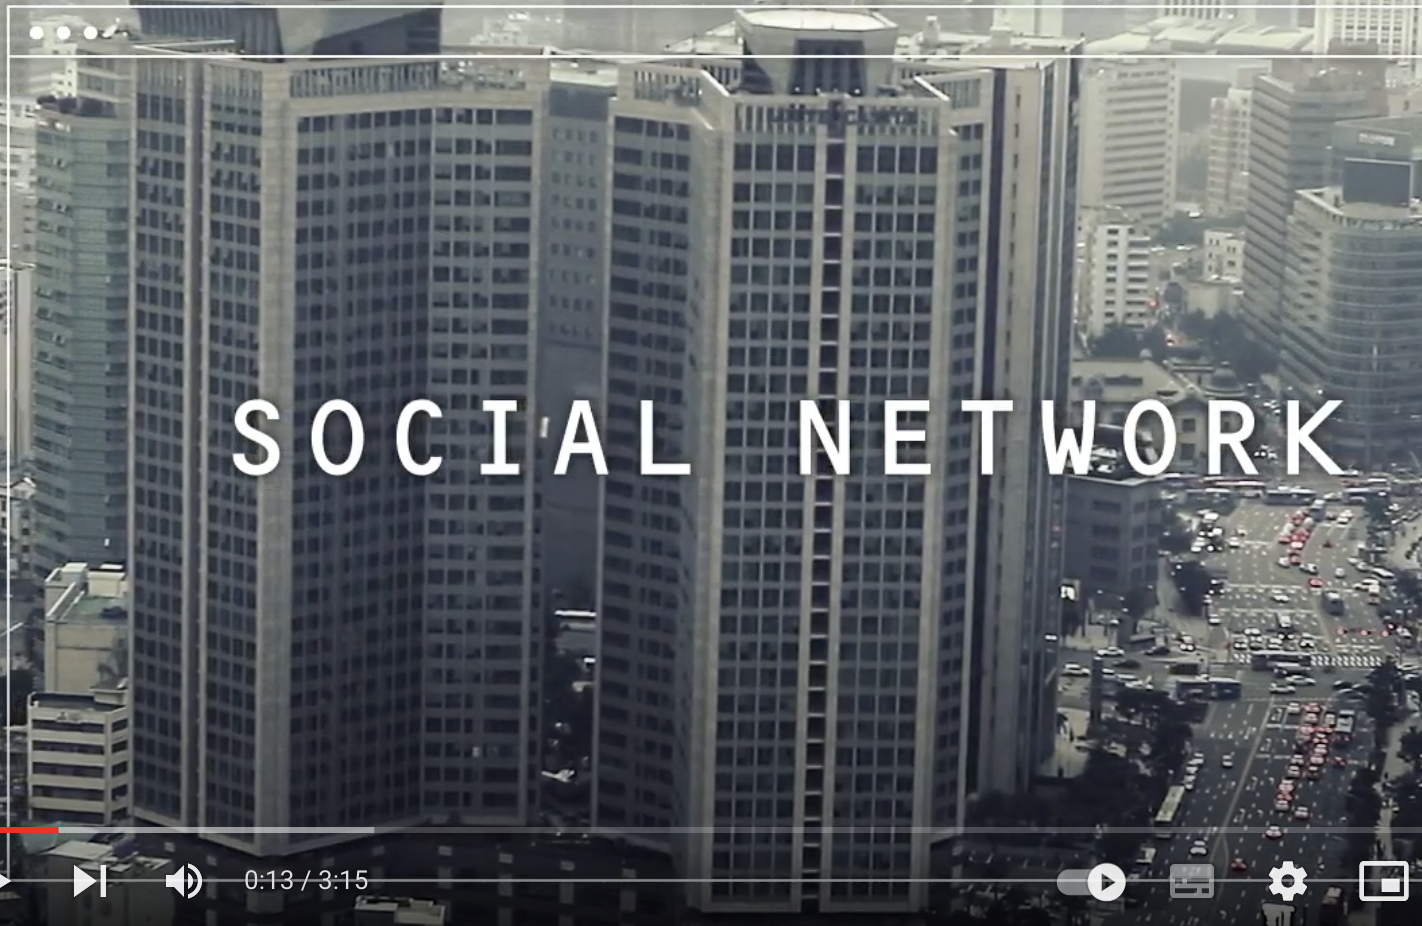 Beomseok Yang: SOCIAL NETWORK